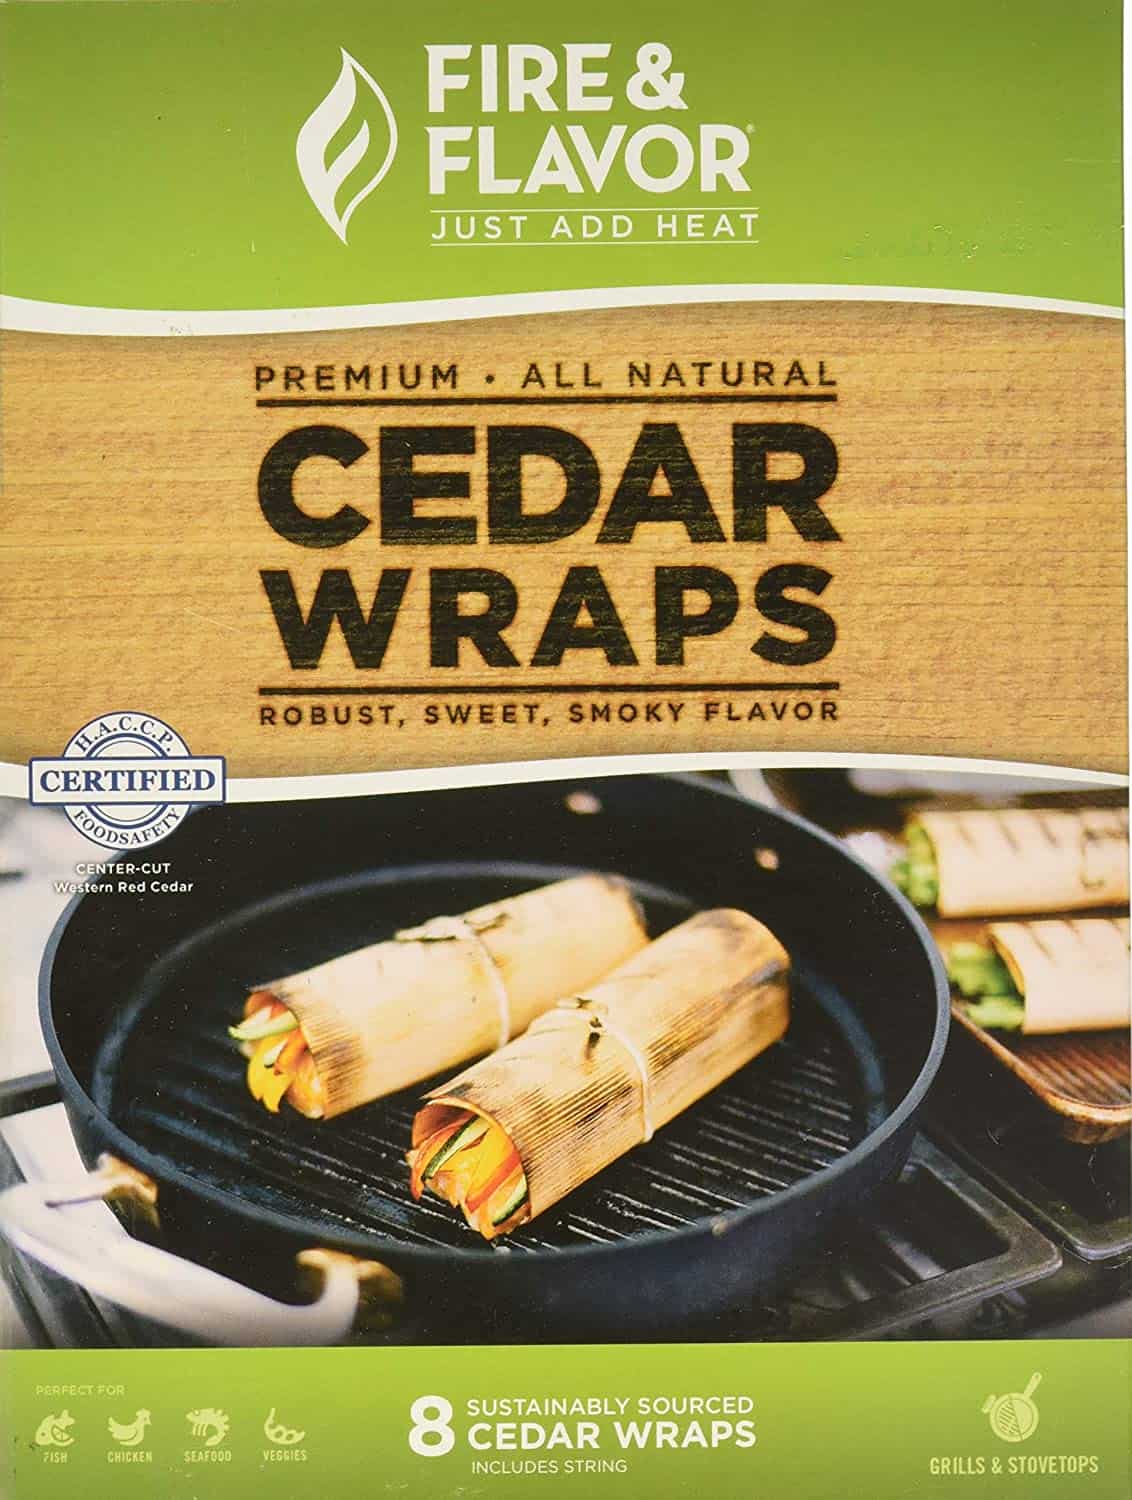 Fire & Flavor Western Red Cedar Wraps